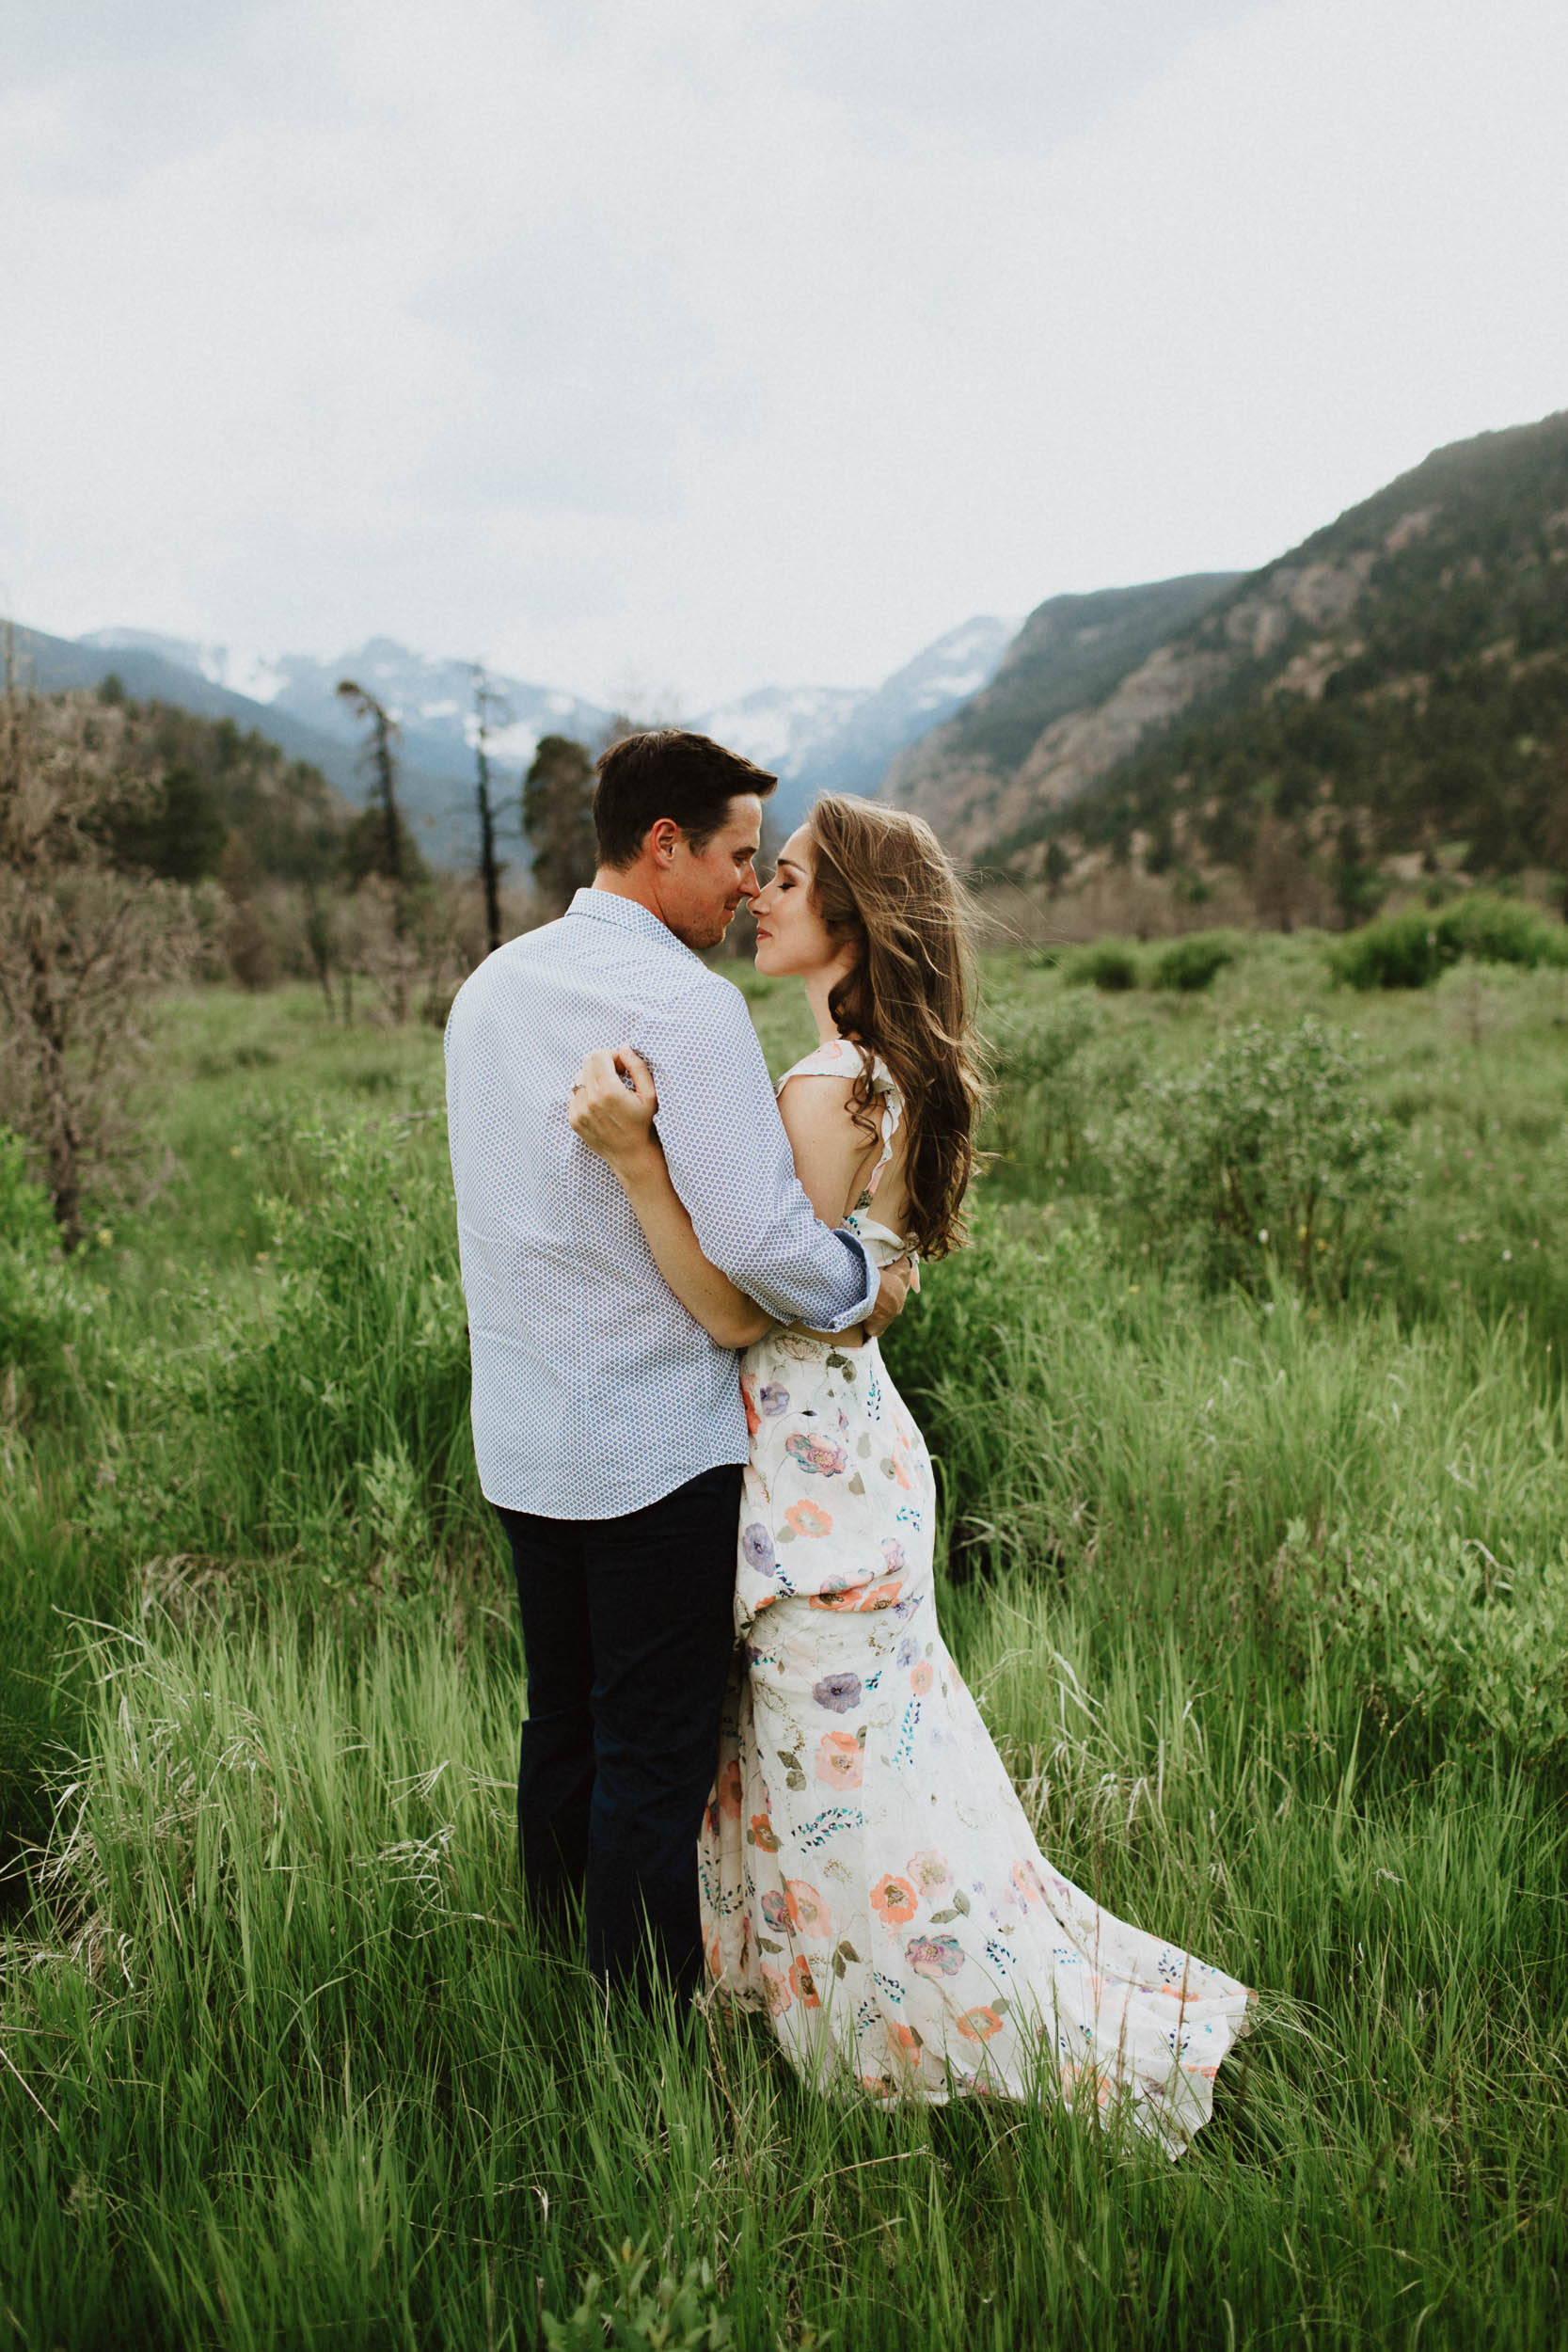 Rocky-Mountain-National-Park-Colorado-Engagement-002@2x.jpg